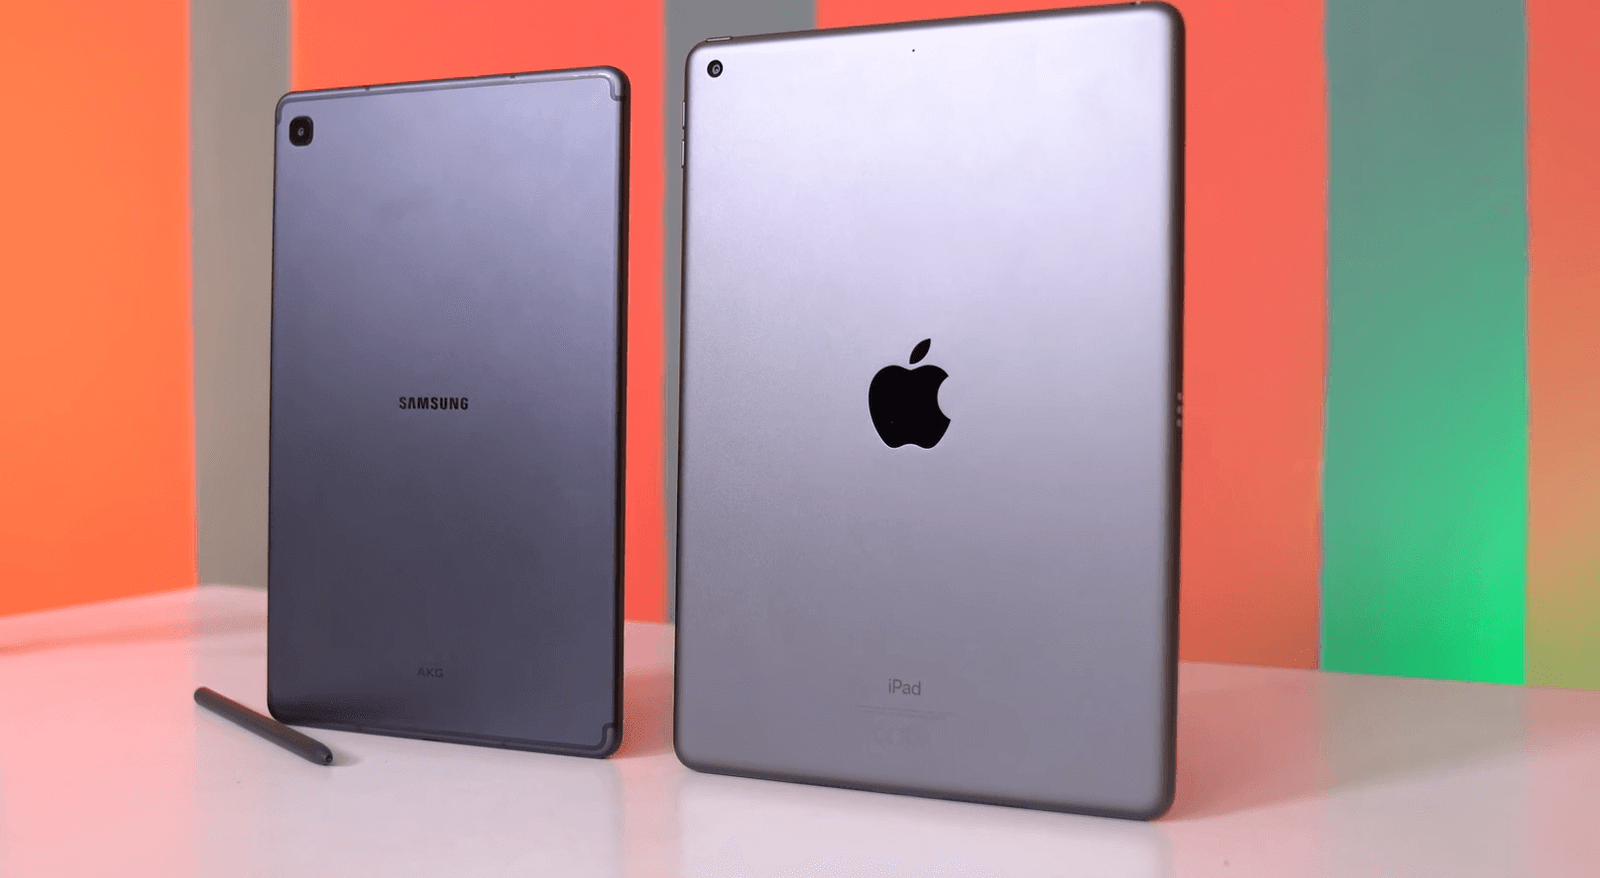 iPad 7th Gen 10.2 inch vs Galaxy Tab S6 Lite Rear